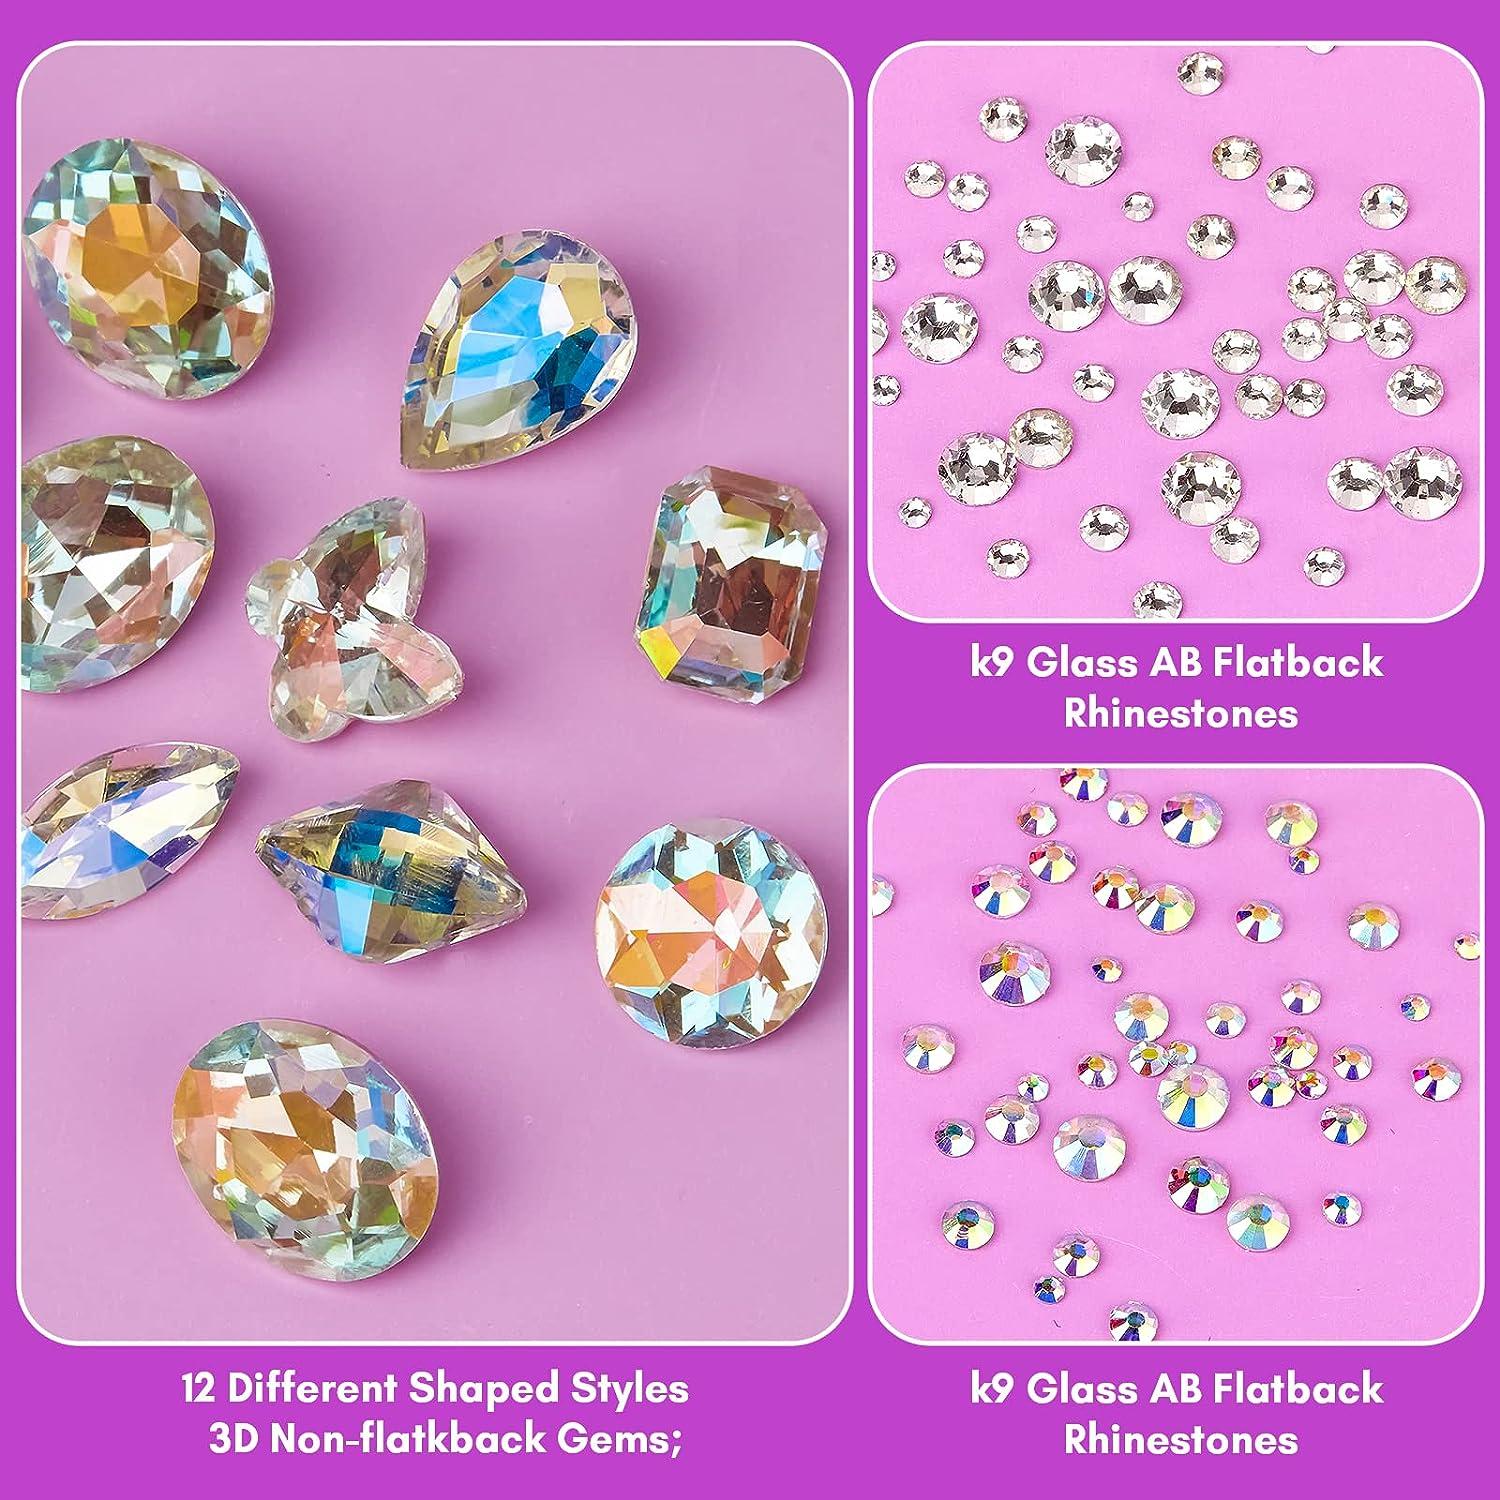 Hot Item] Waloc Nail Art Diamond Jewelry Glue Curing Agent Set